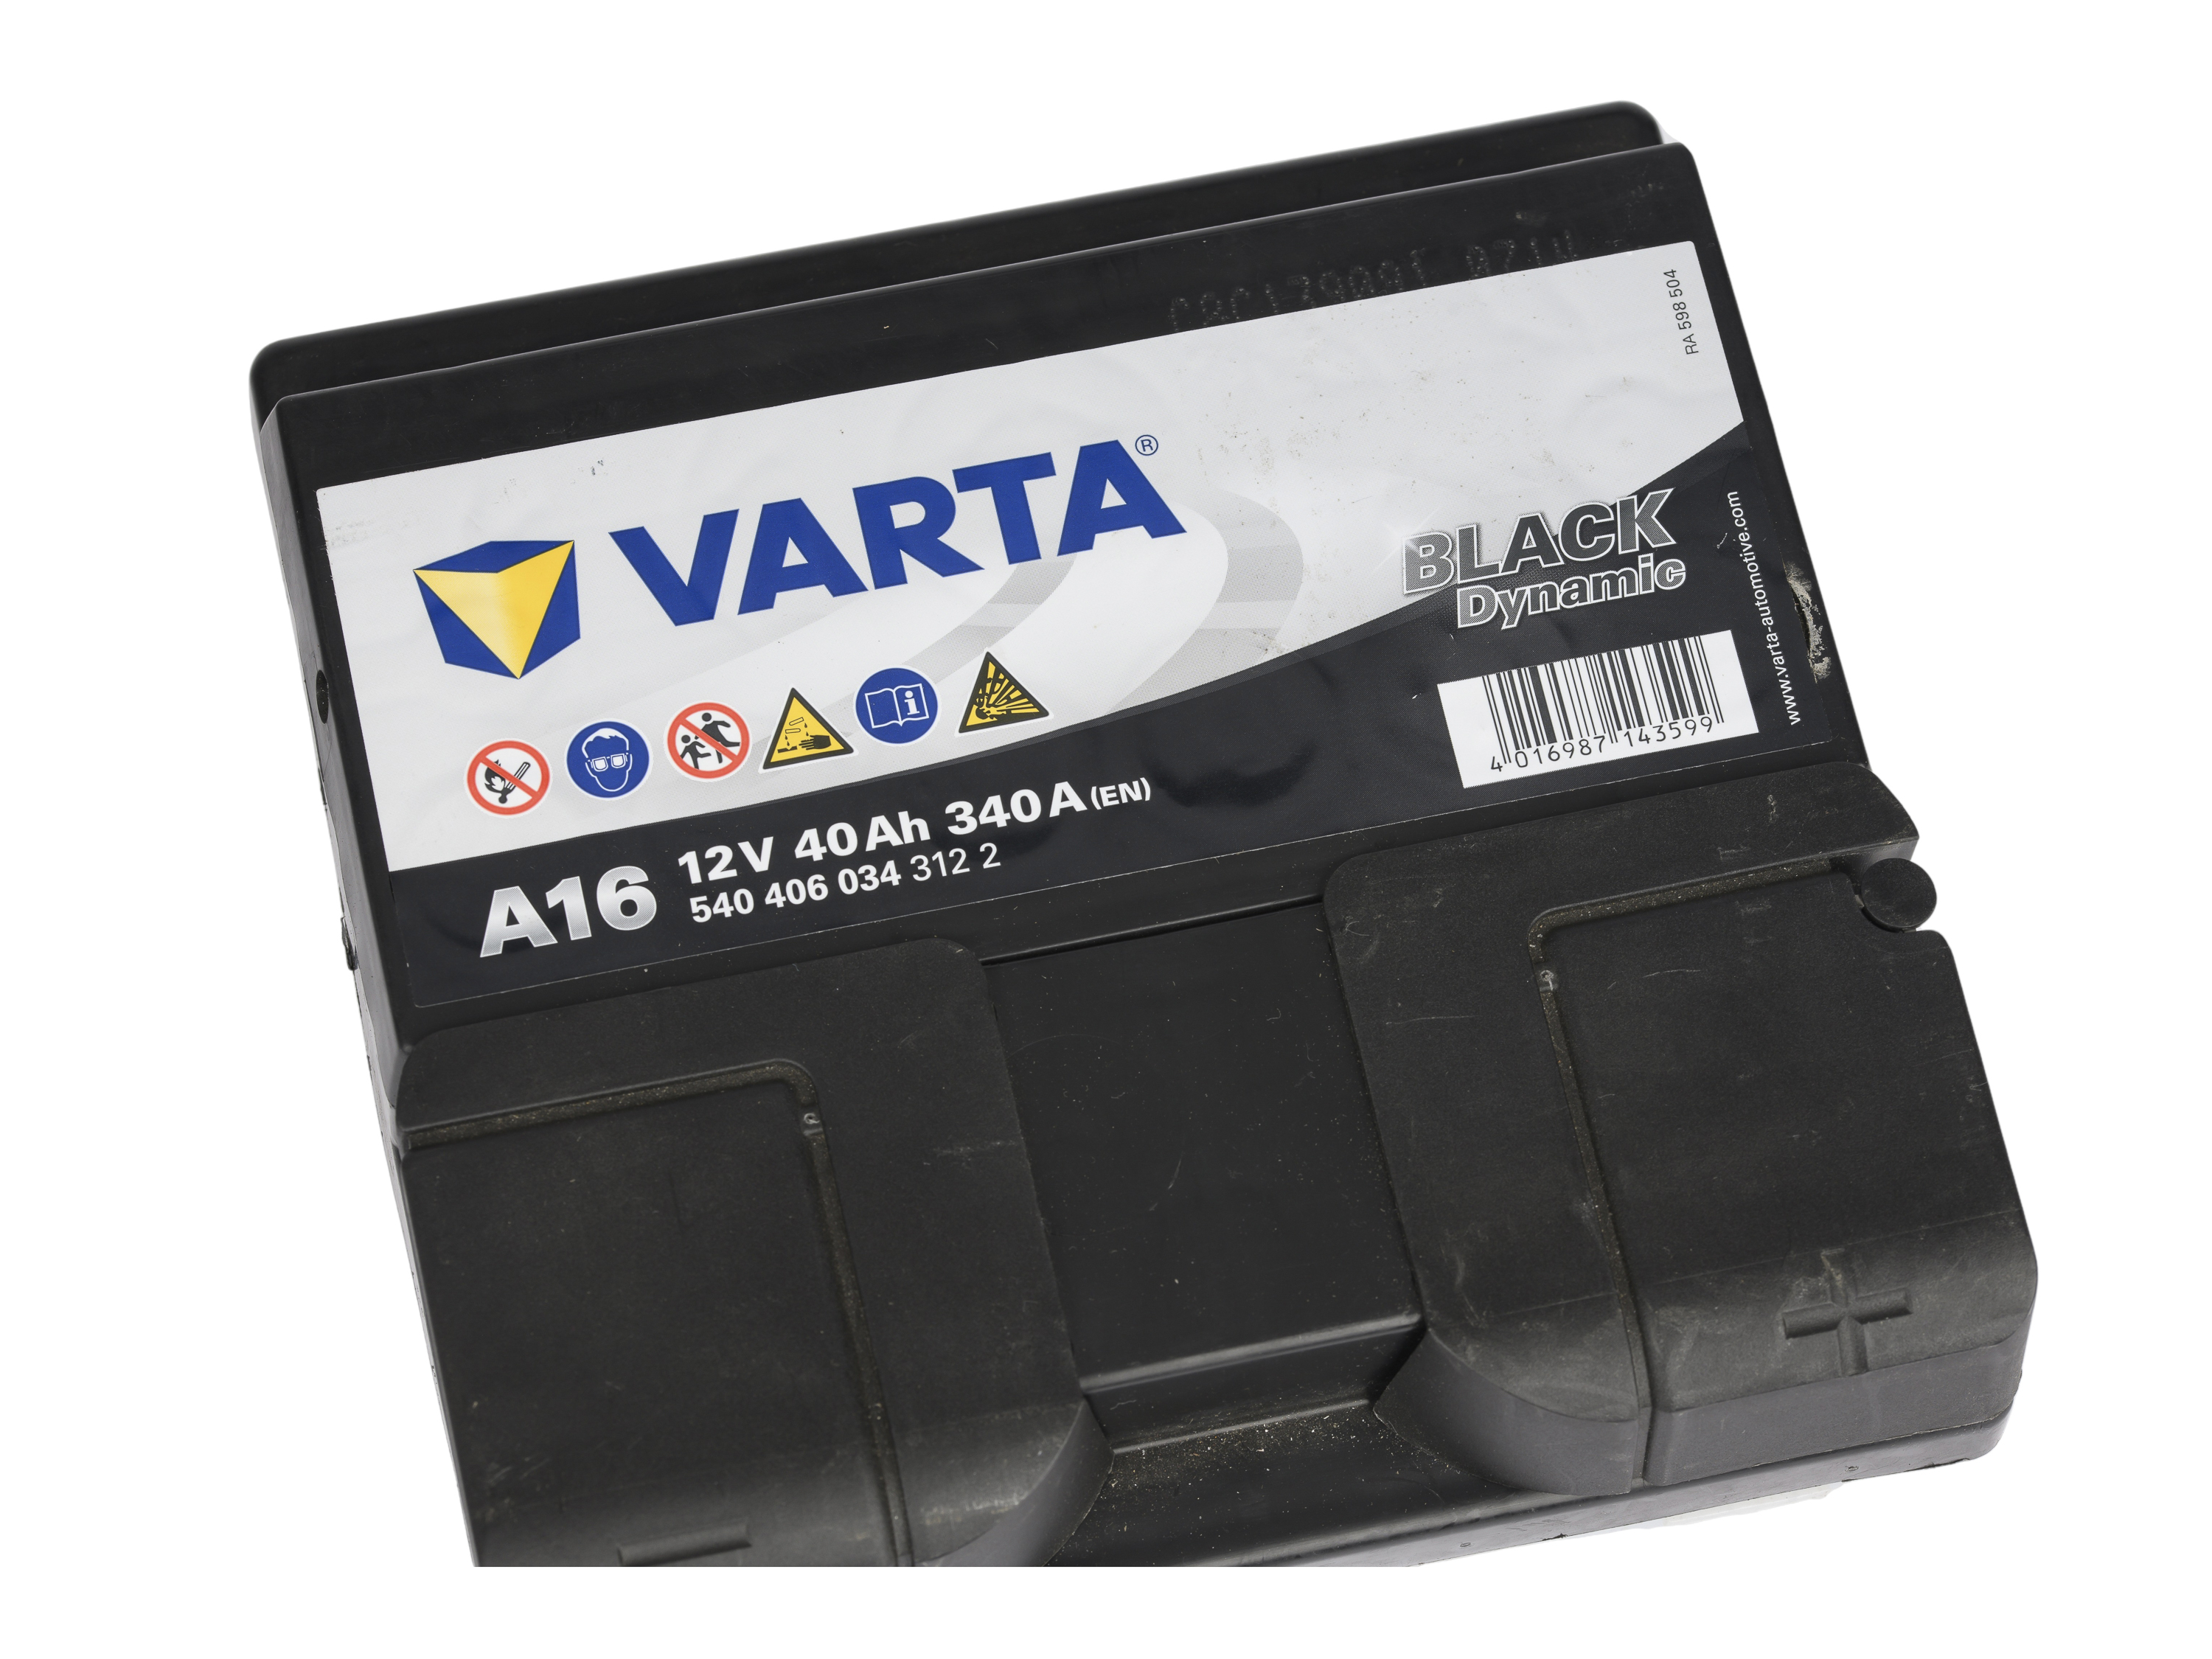 VARTA Accu Black Dynamic A16 - 12V 40Ah - 540.406.034